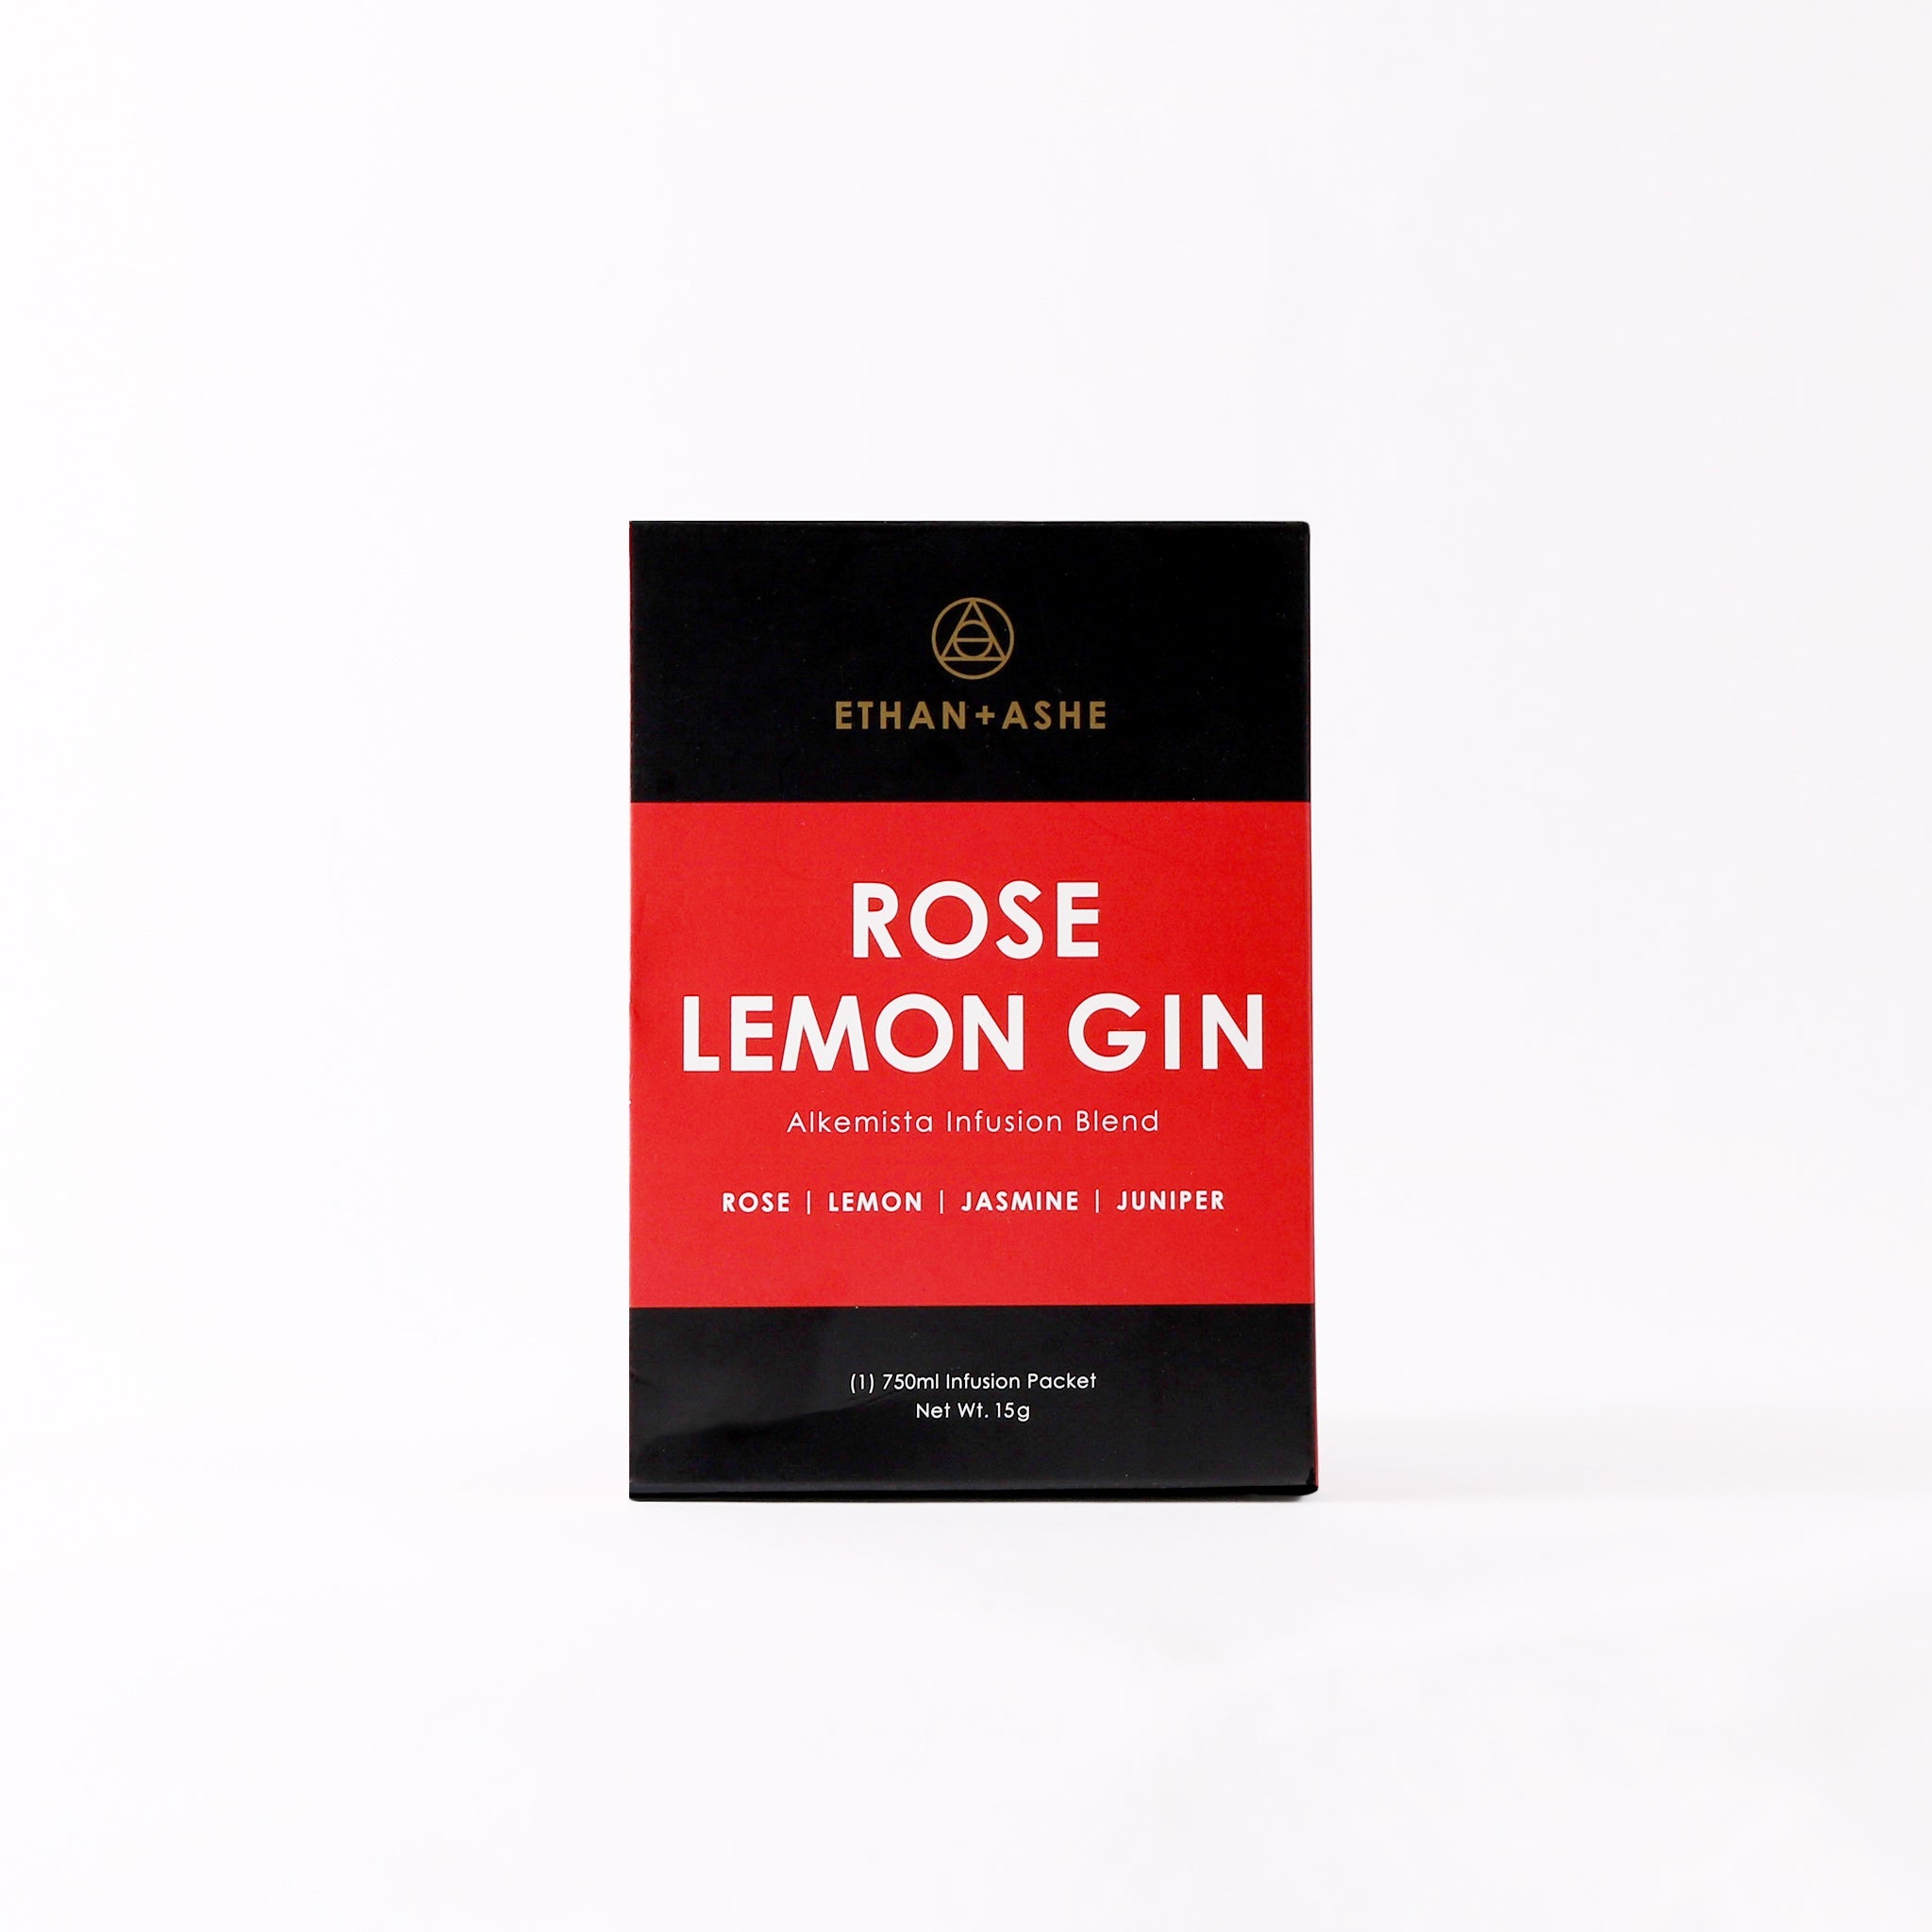  Alkemista Infusion - Rose Lemon Gin by Ethan+Ashe Ethan+Ashe Perfumarie